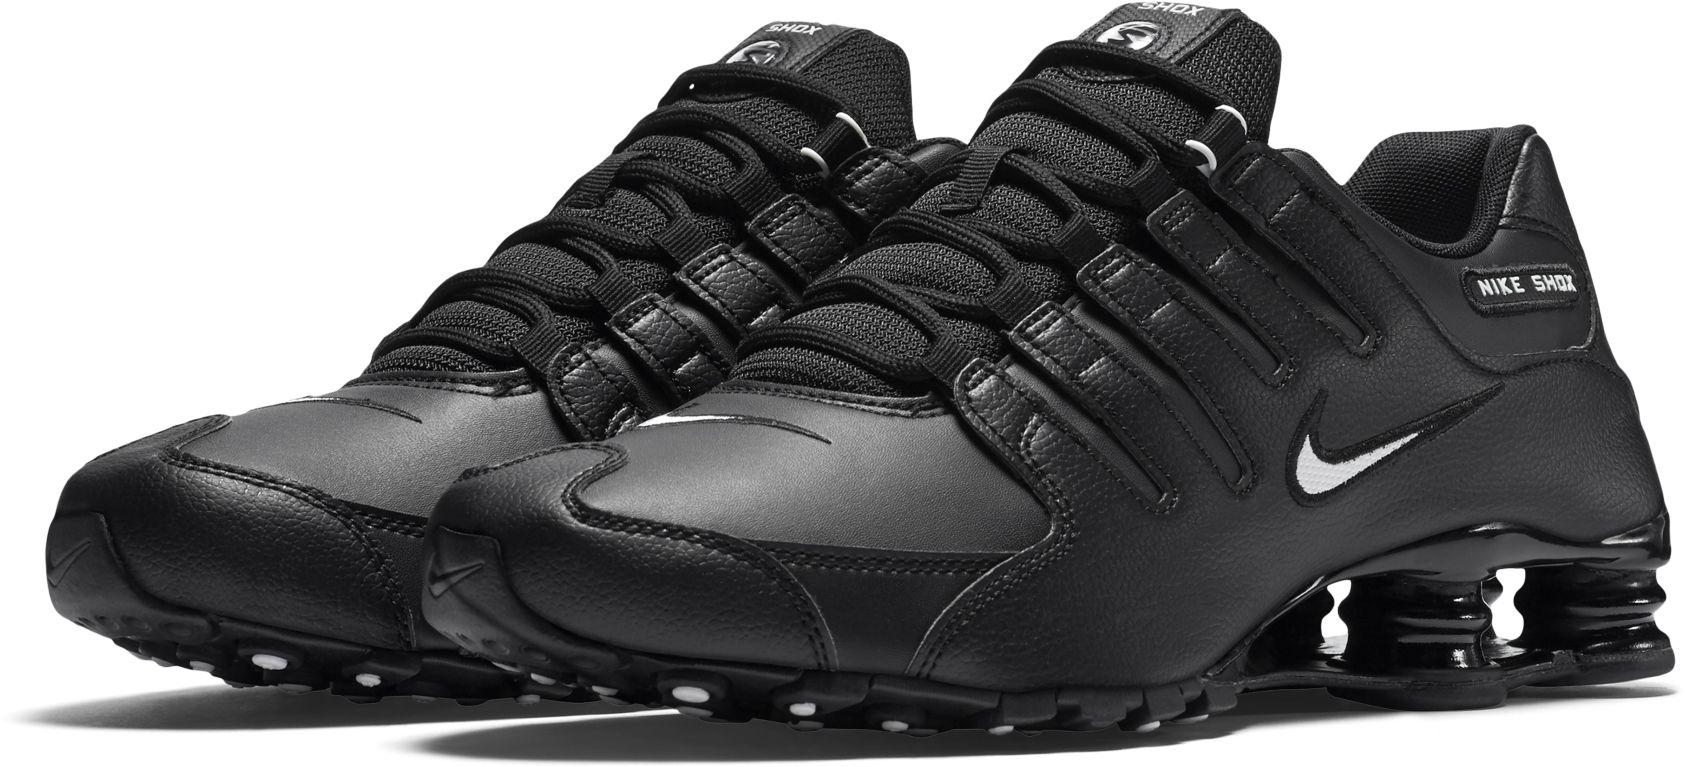 Nike Synthetic Shox Nz Eu in Black/White (Black) for Men - Lyst